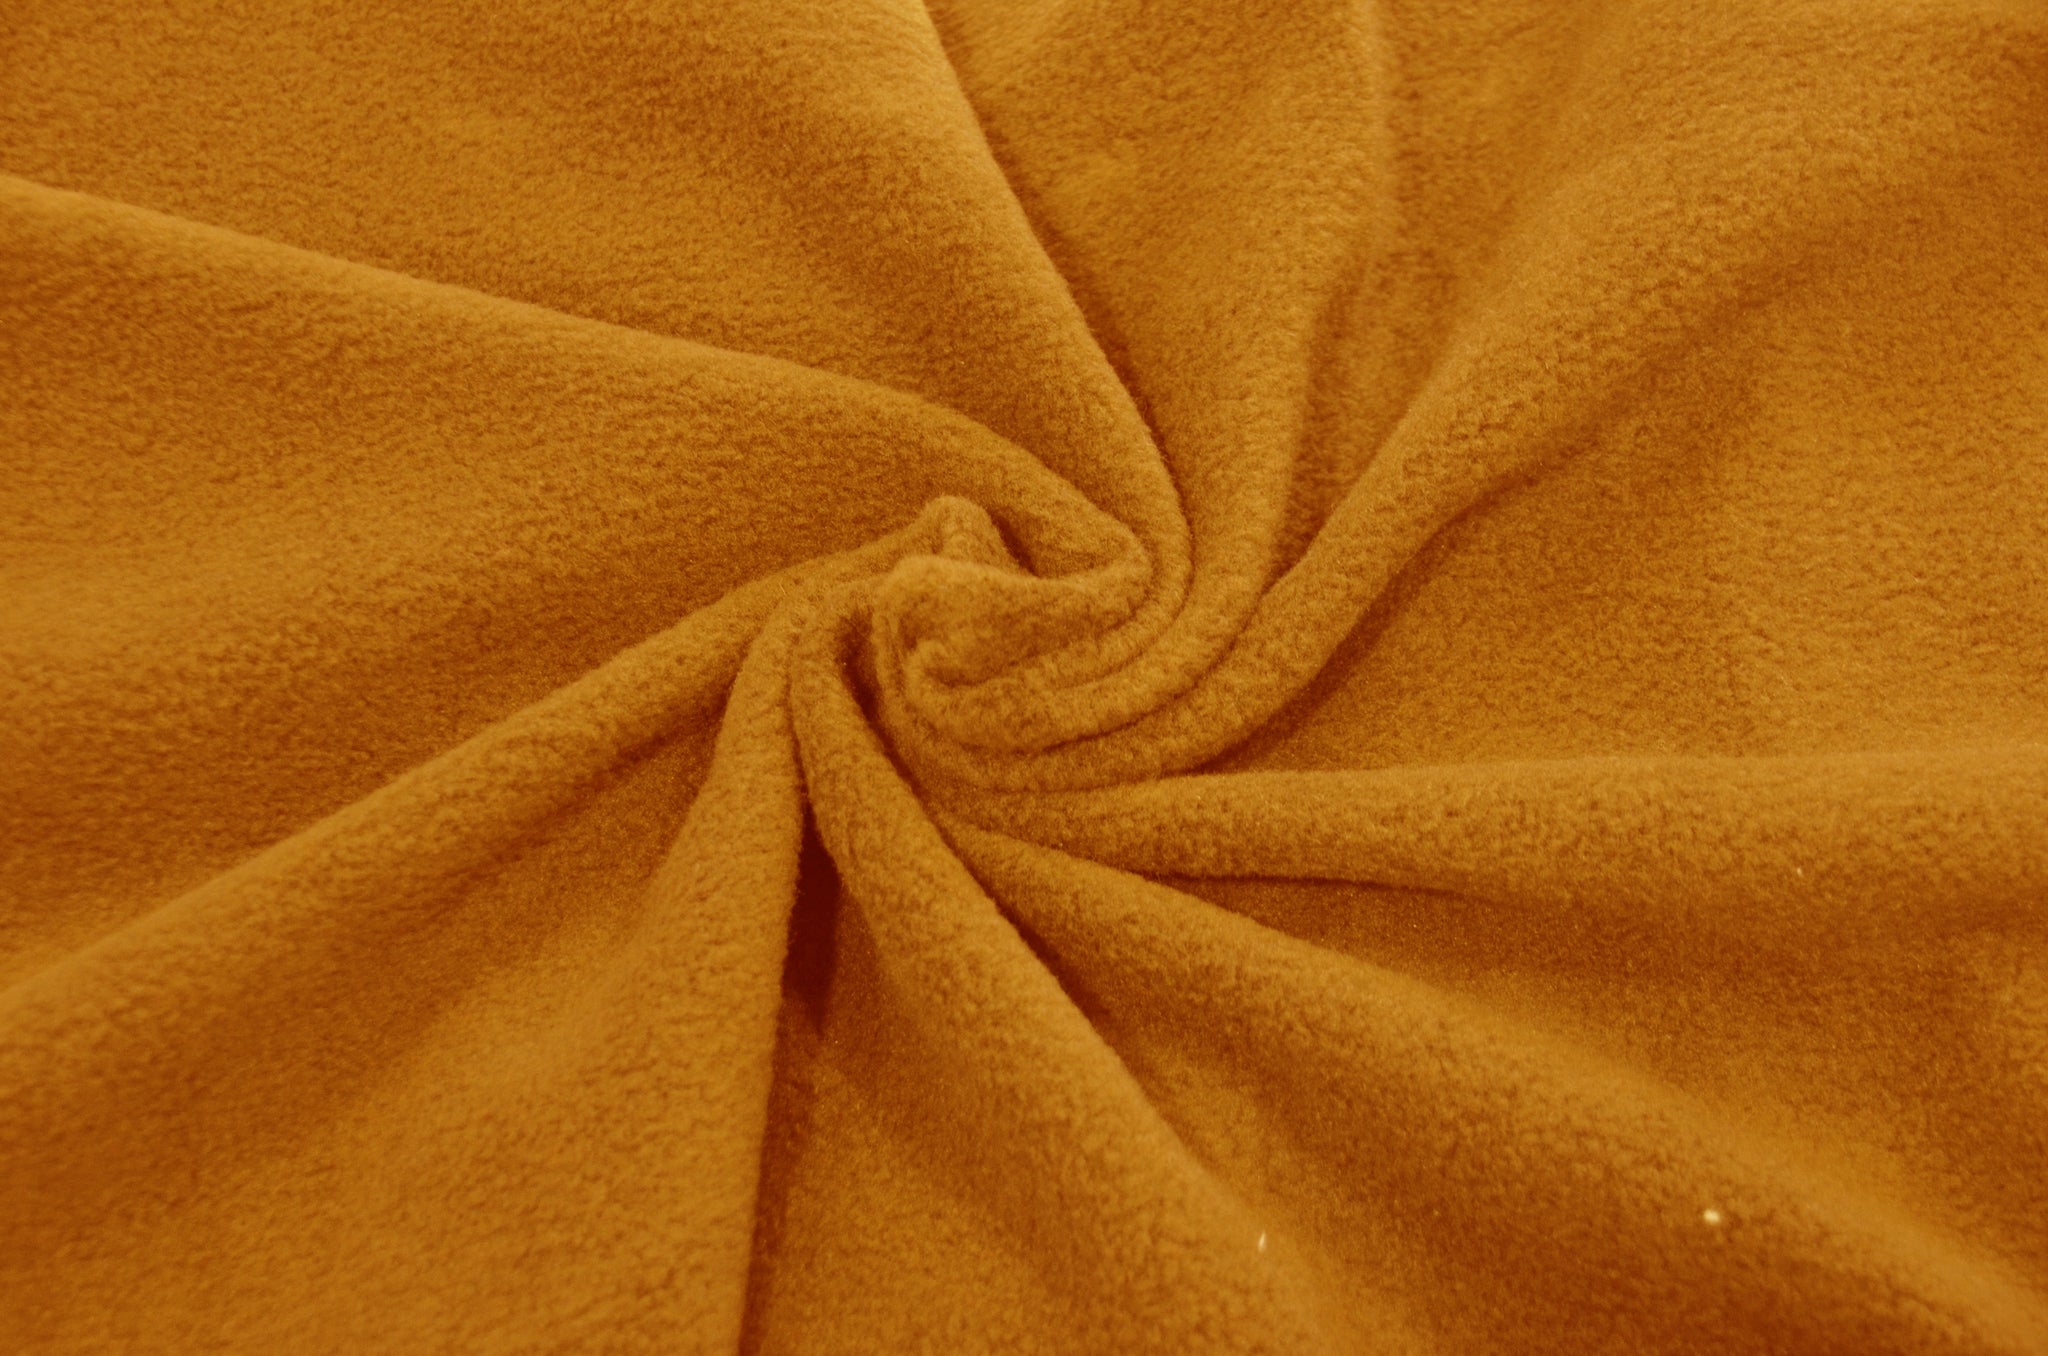  Fleece Fabric | 2 Yards | 72X60 Inch | Polar Fleece | Soft, Anti-Pill |  Throw, Blanket, Poncho, Pillow Cover, PJ Pants, Booties, Eye Mask (Royal